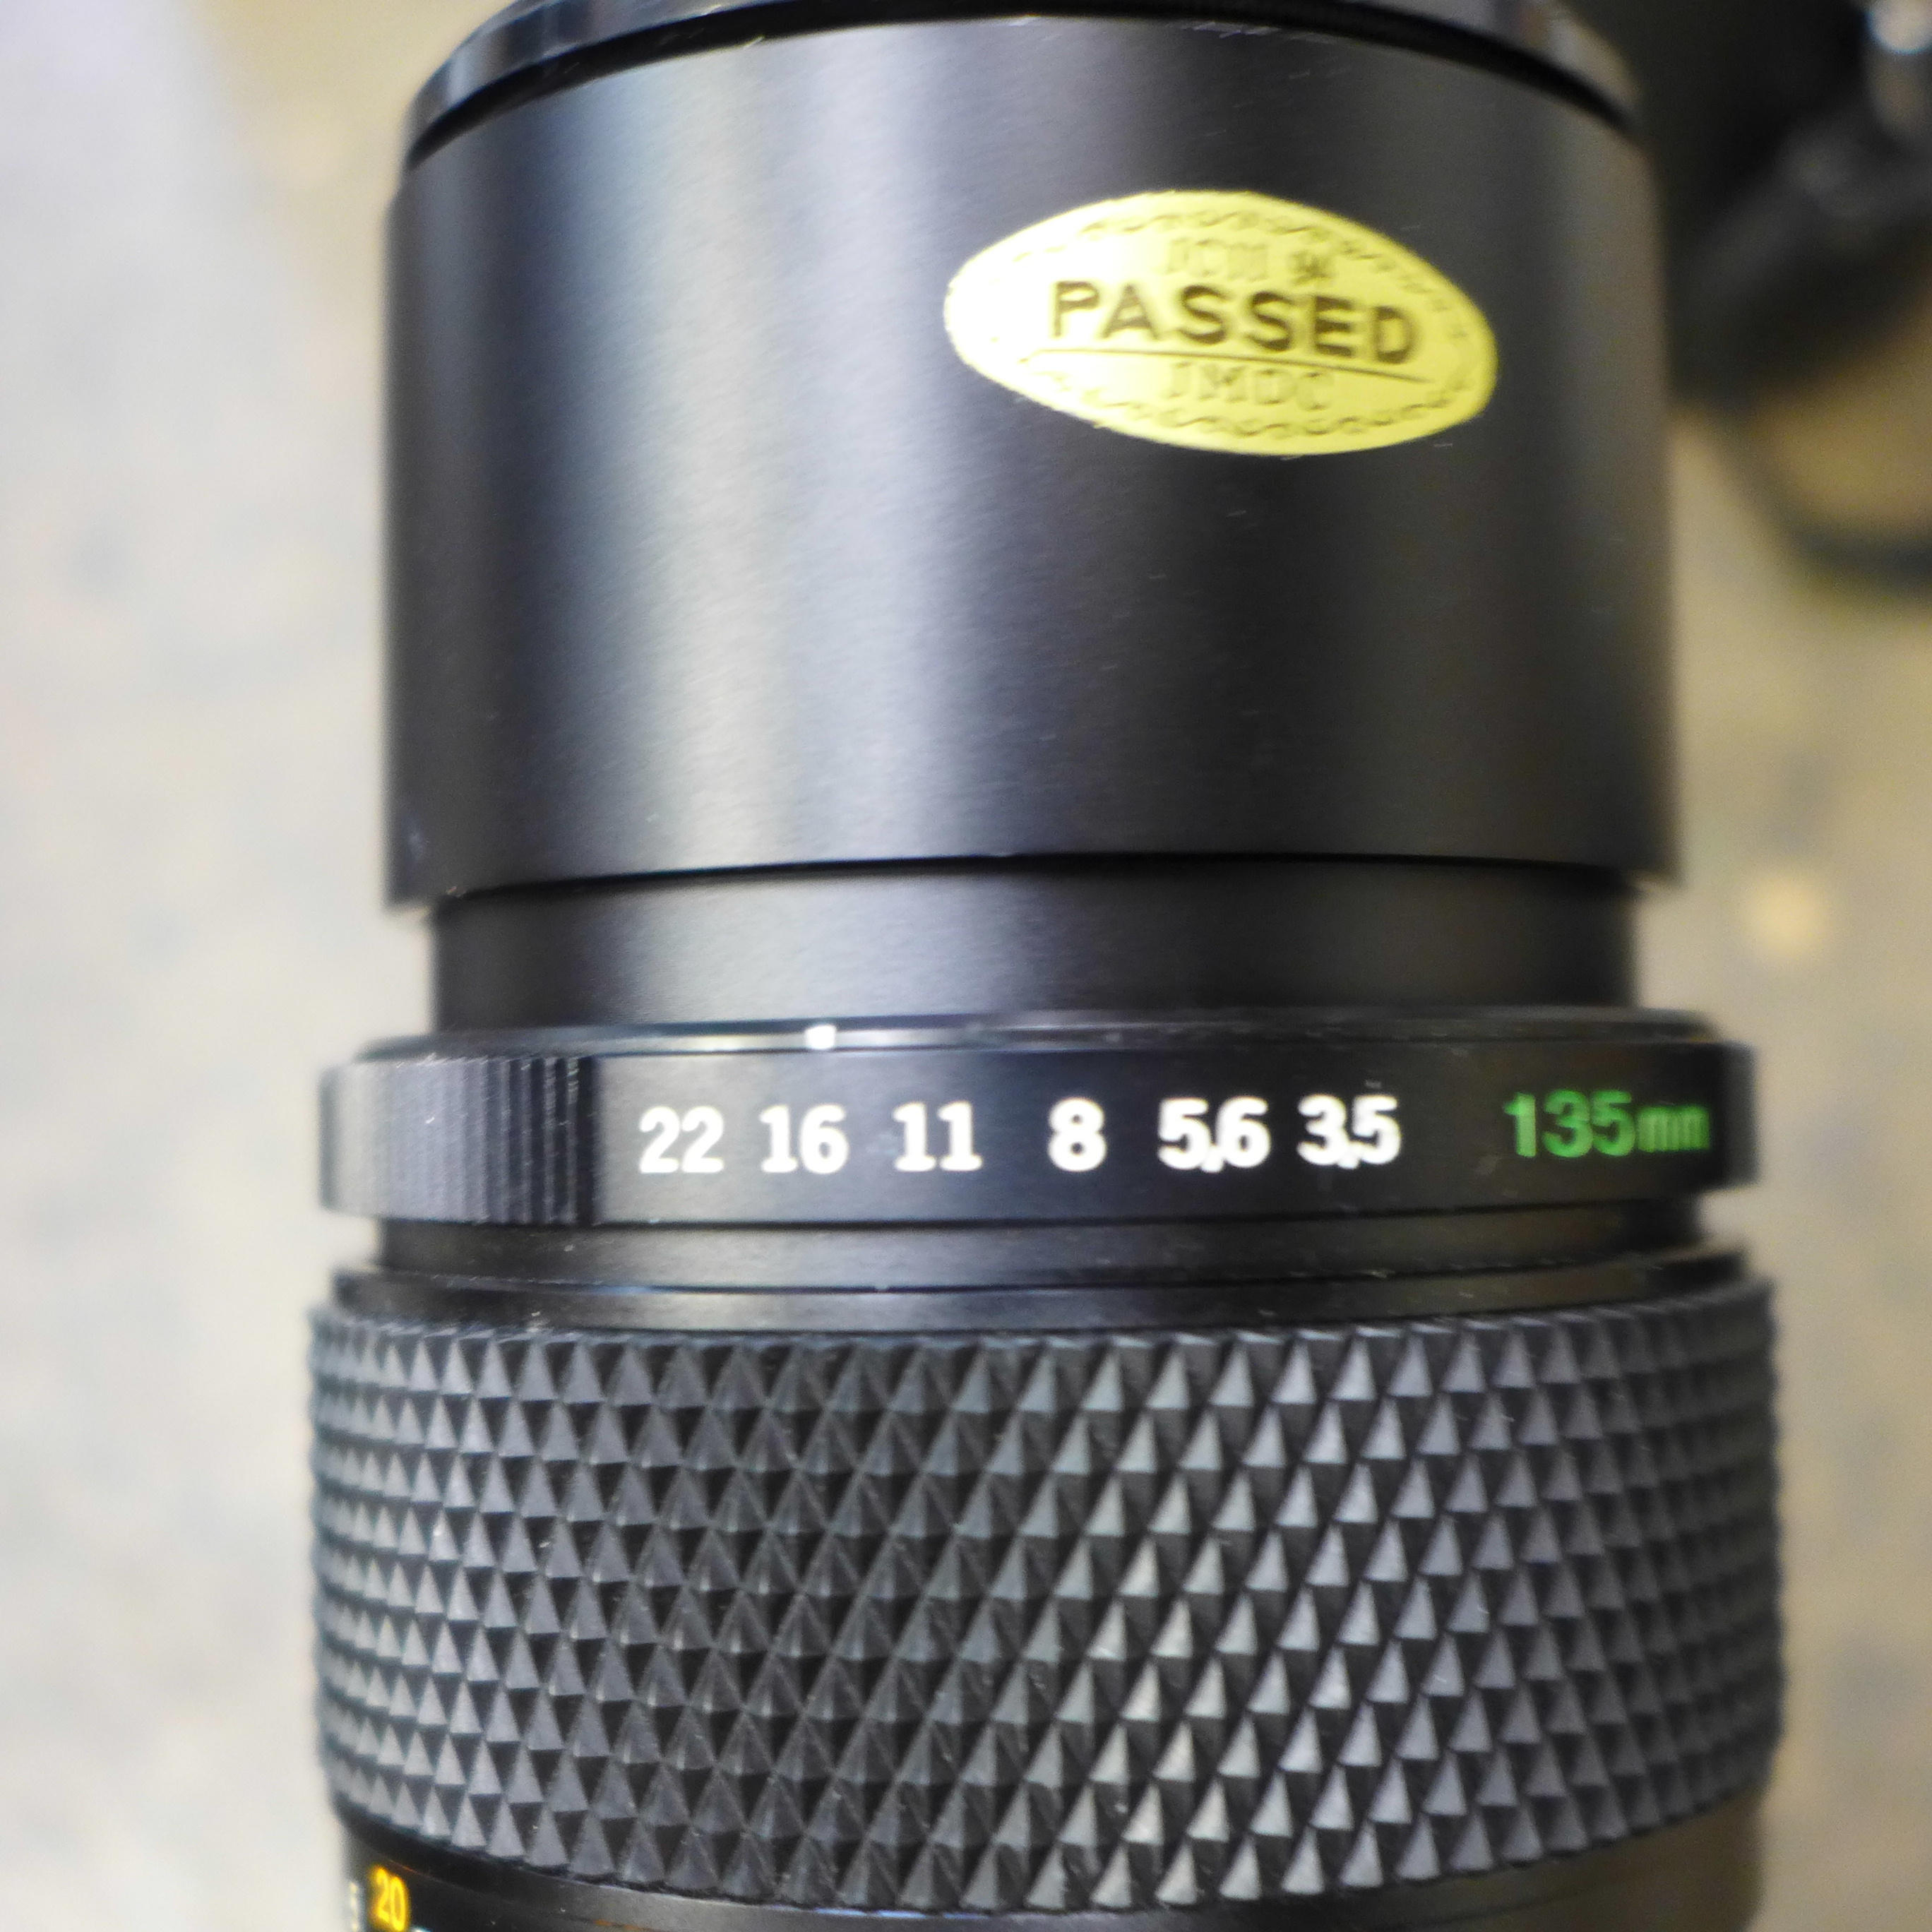 Six Olympus camera lenses including Zuiko digital ED 70-300mm, 200mm F4, 35mm, 28mm, 135mm, - Bild 9 aus 9